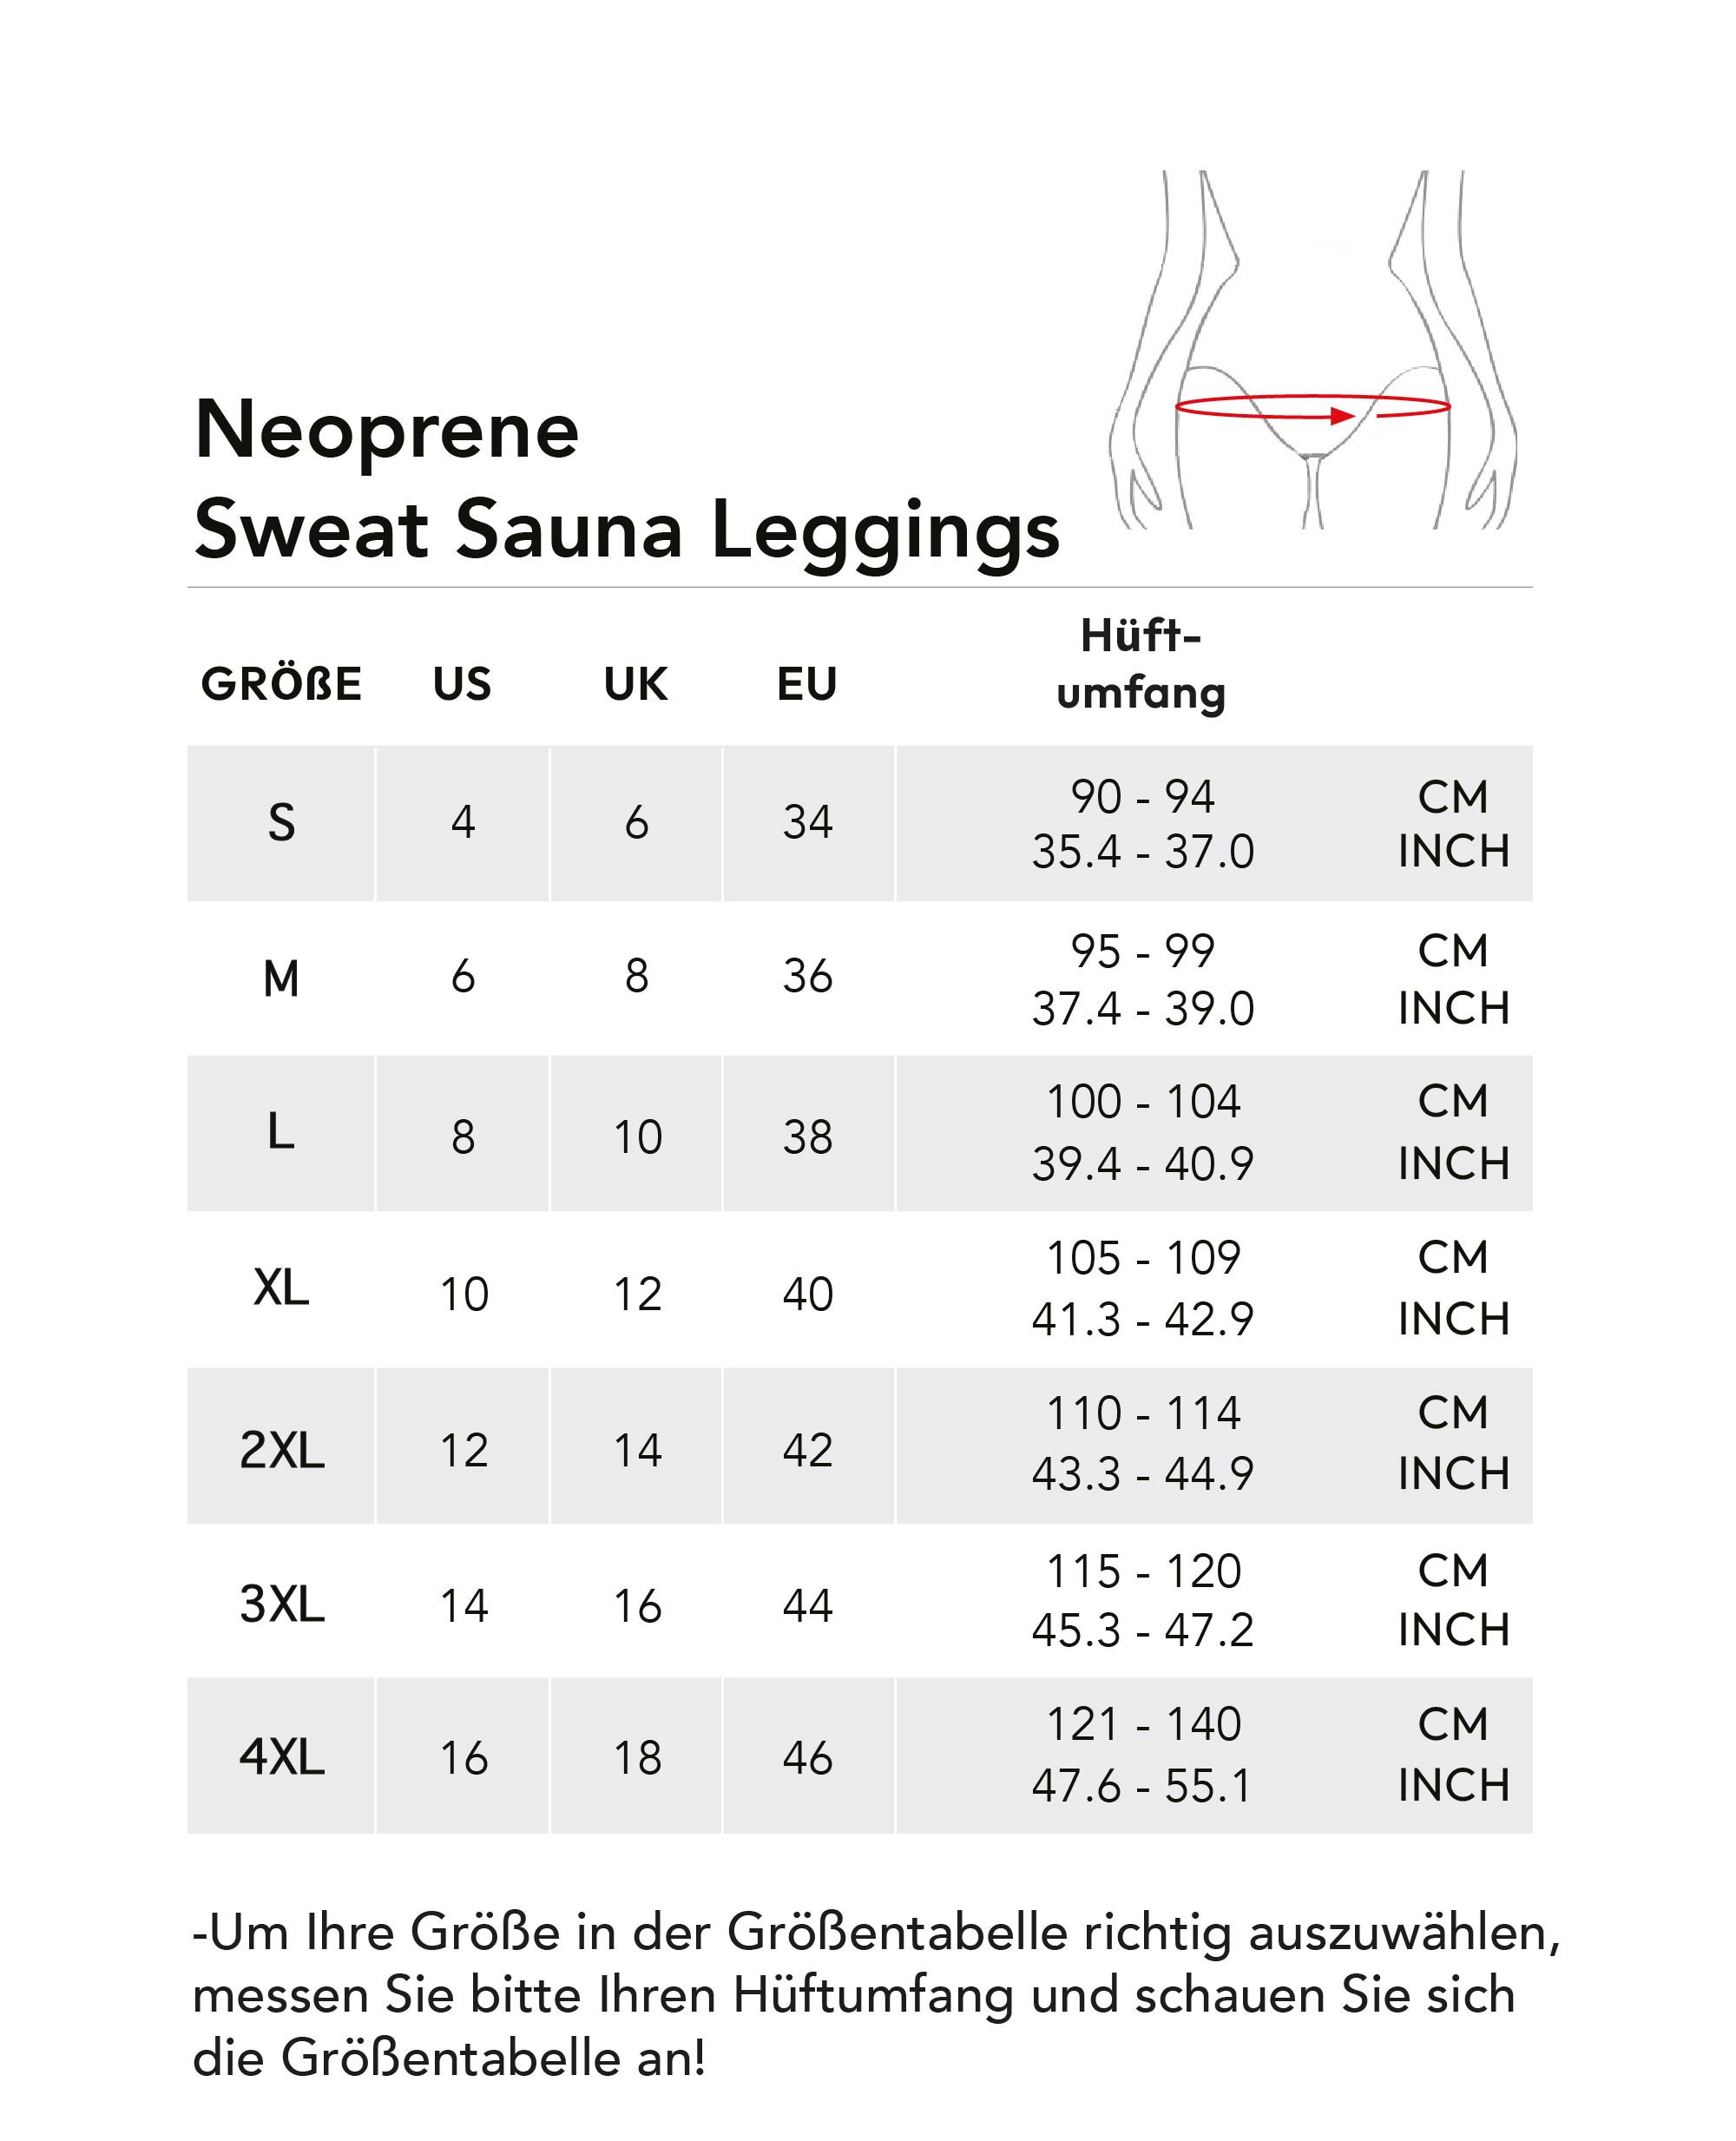 neoprene-sweat-sauna- leggings.jpg (249 KB)